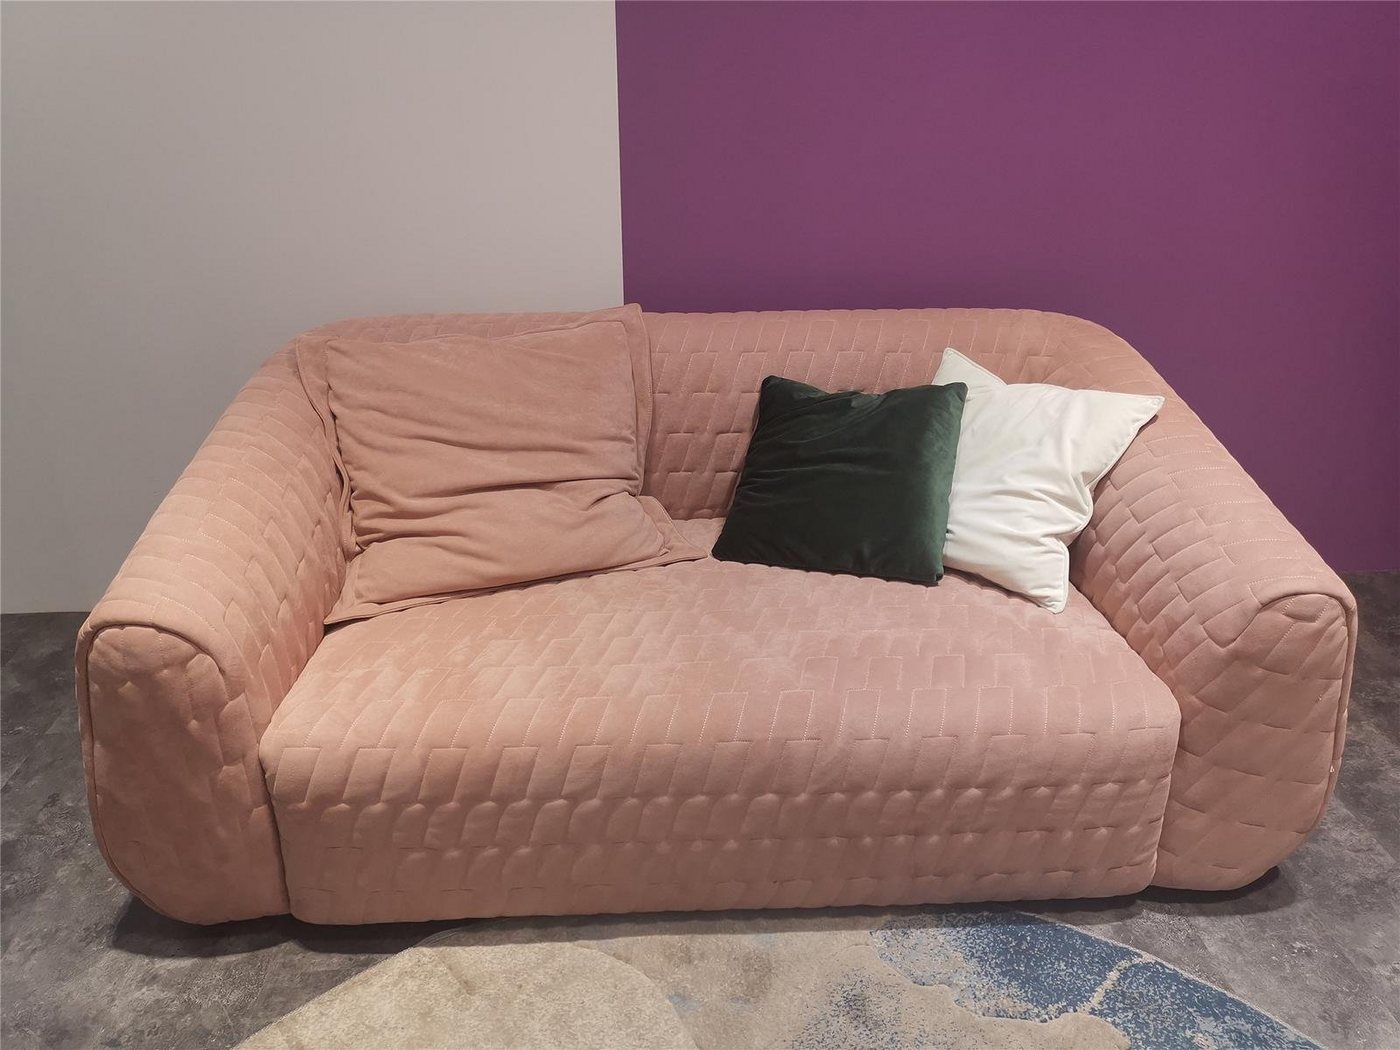 JVmoebel Sofa Chesterfield Ledersofa Couch Sofagarnitur 3+1+1 Sitzer, Made in Europe von JVmoebel